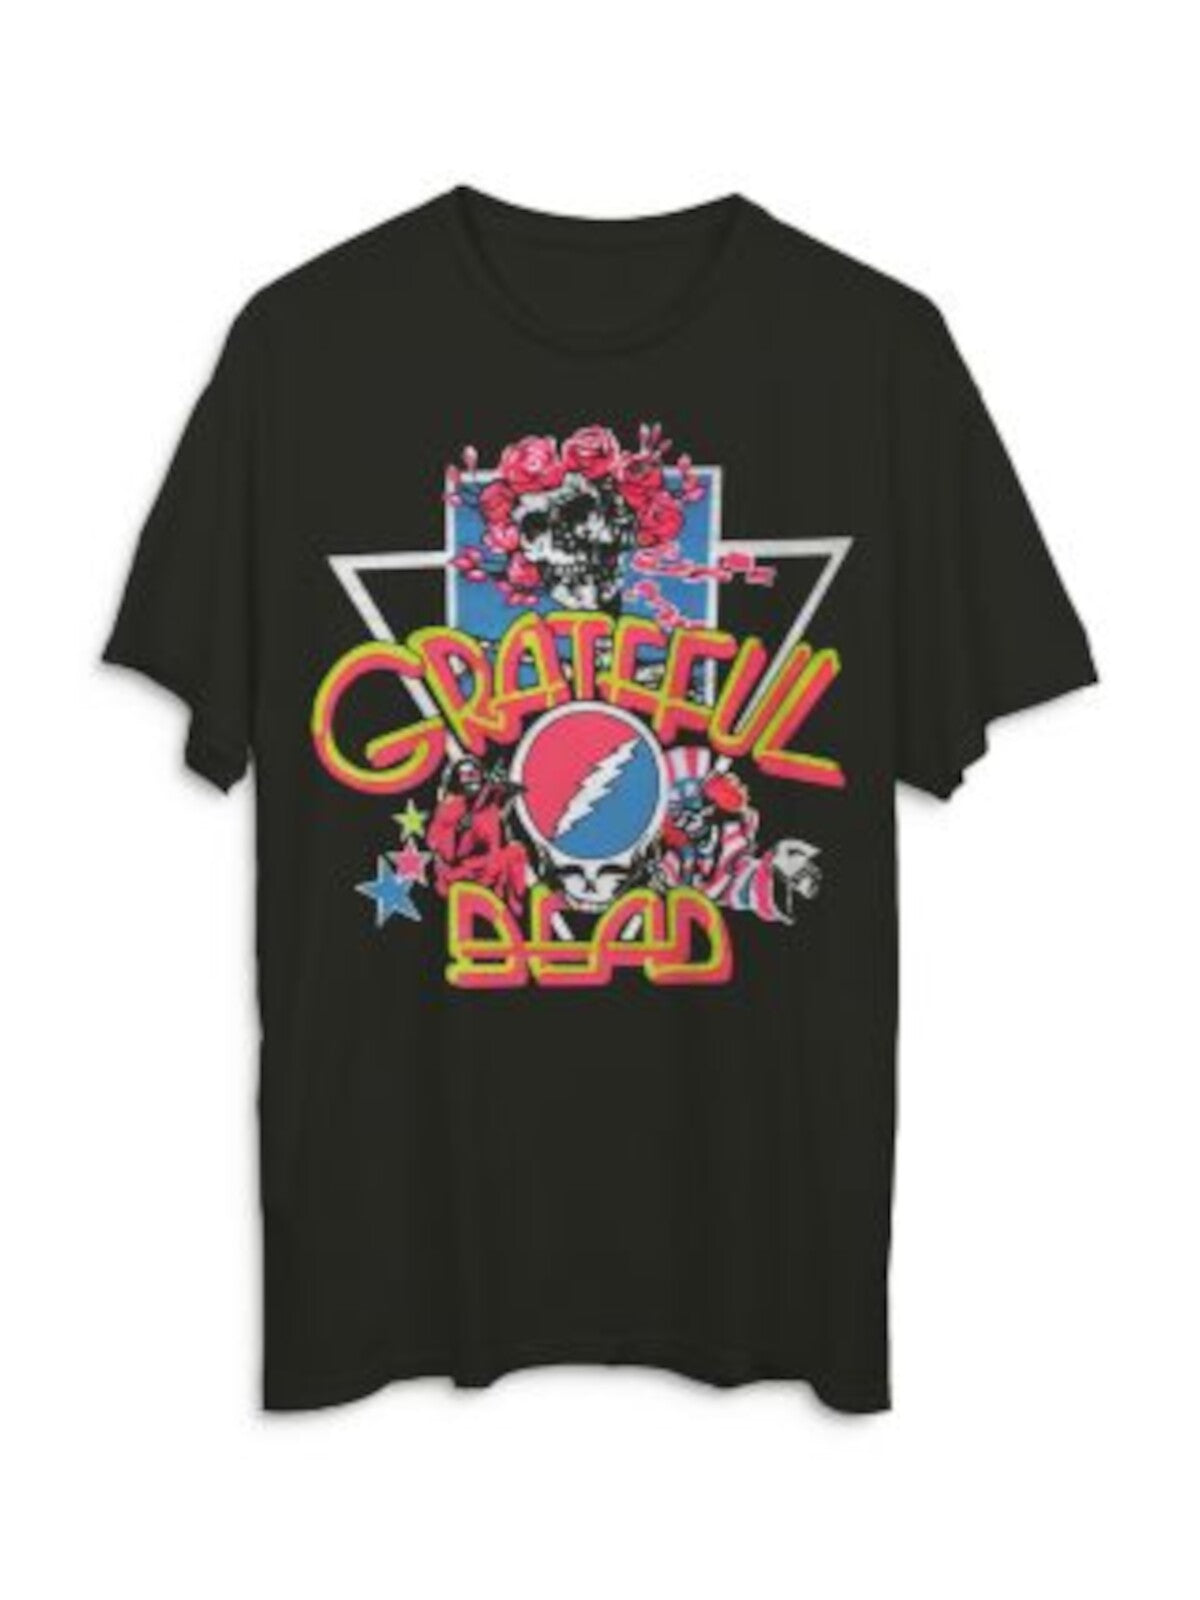 HYBRID APPAREL Mens Band Black Graphic T-Shirt S